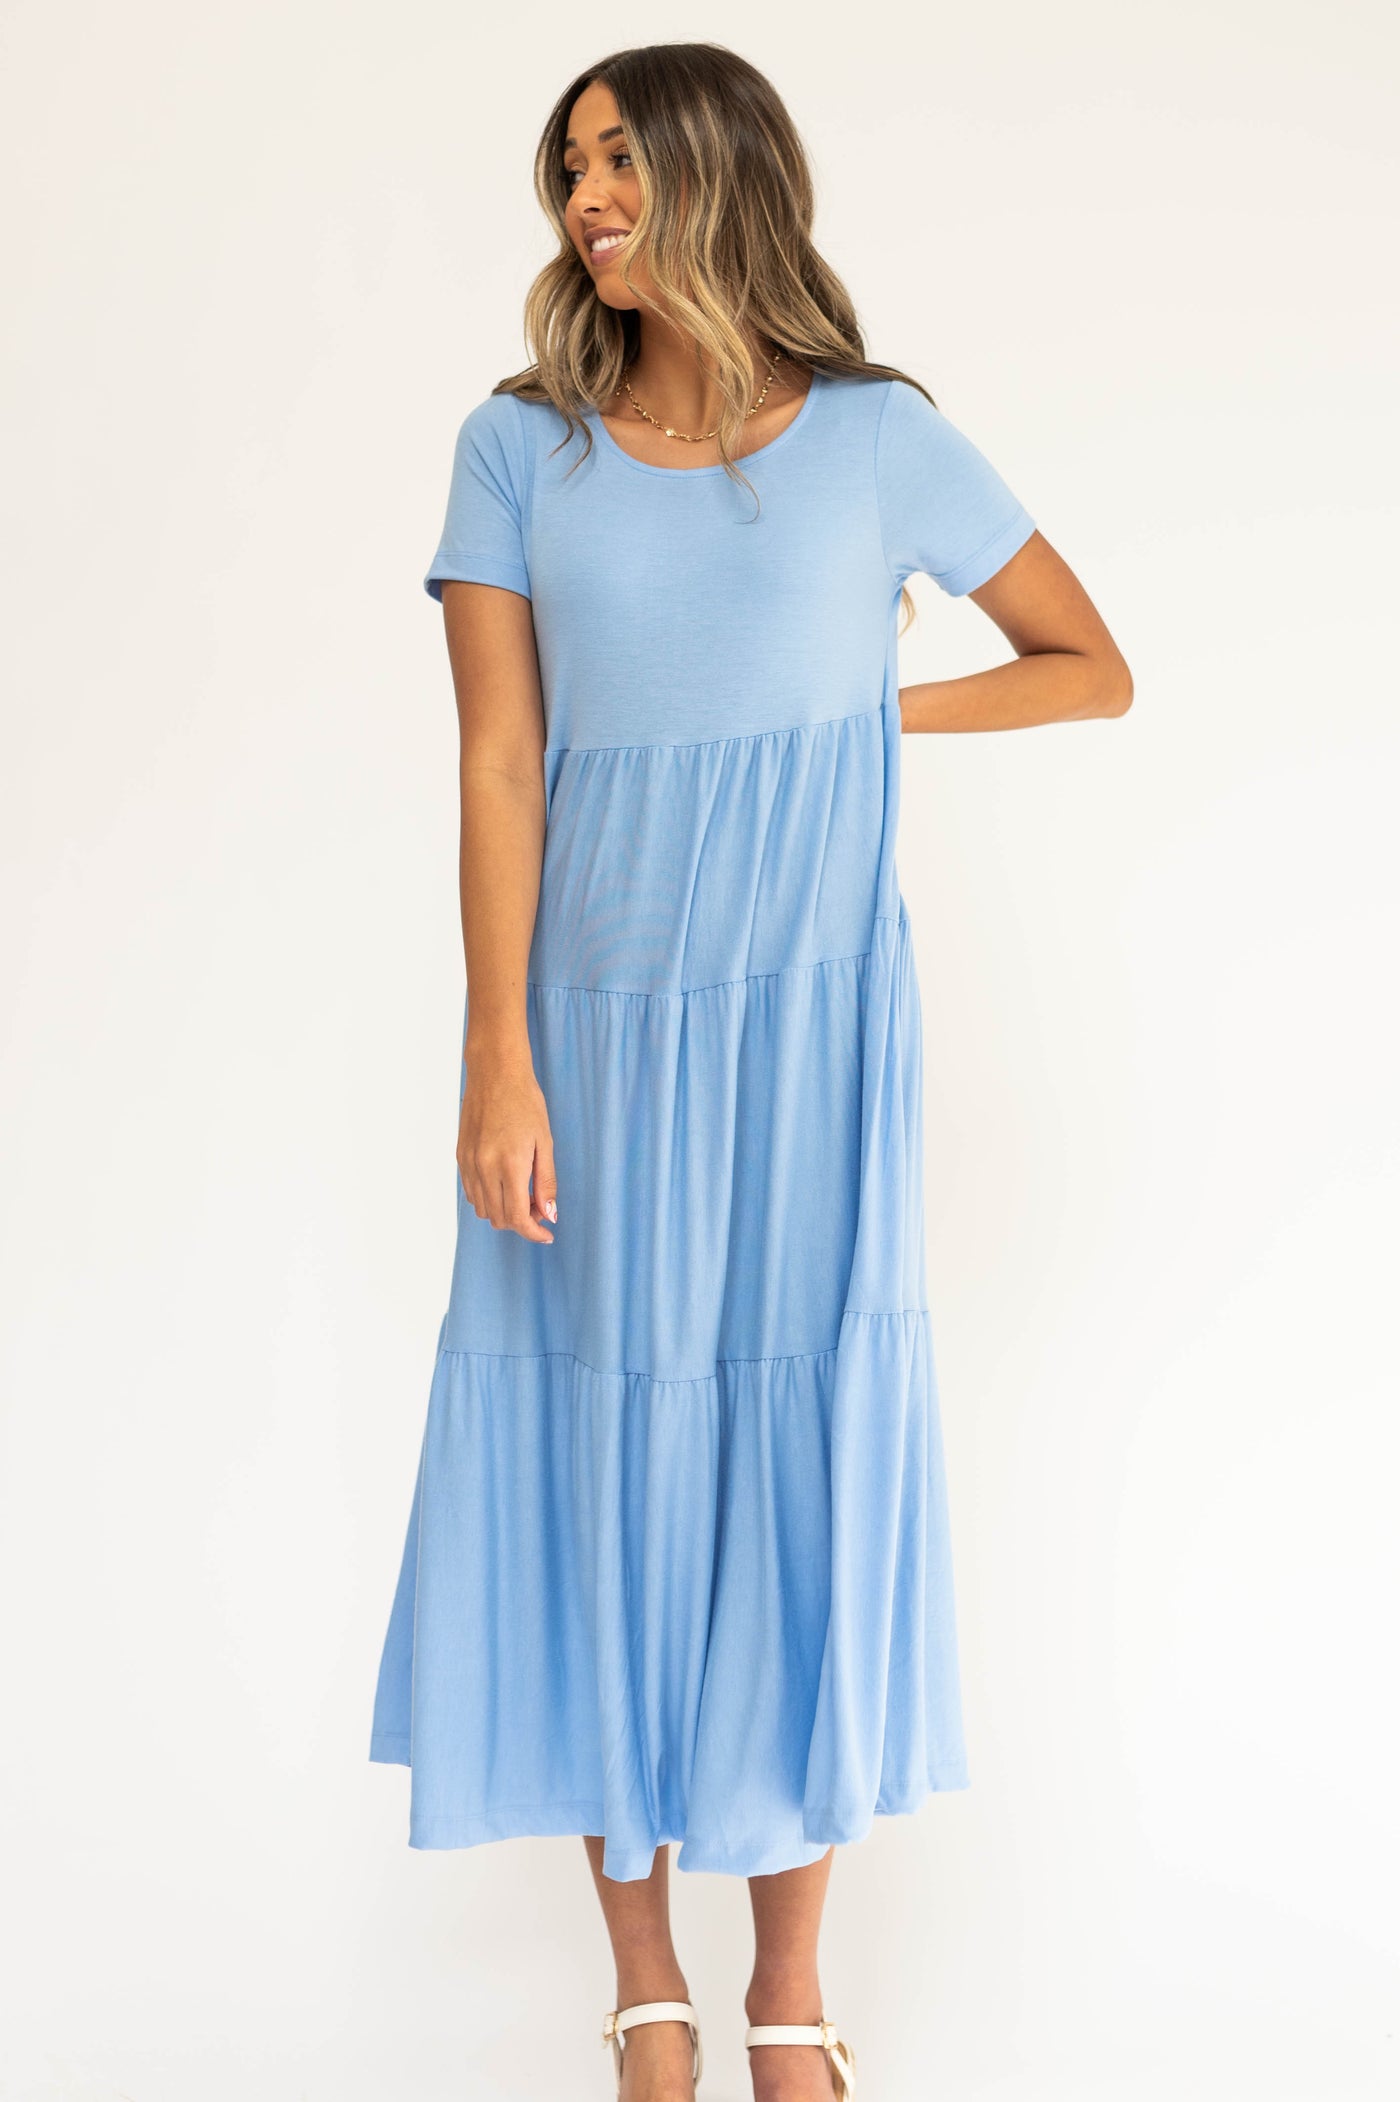 Short sleeve blue spring dress